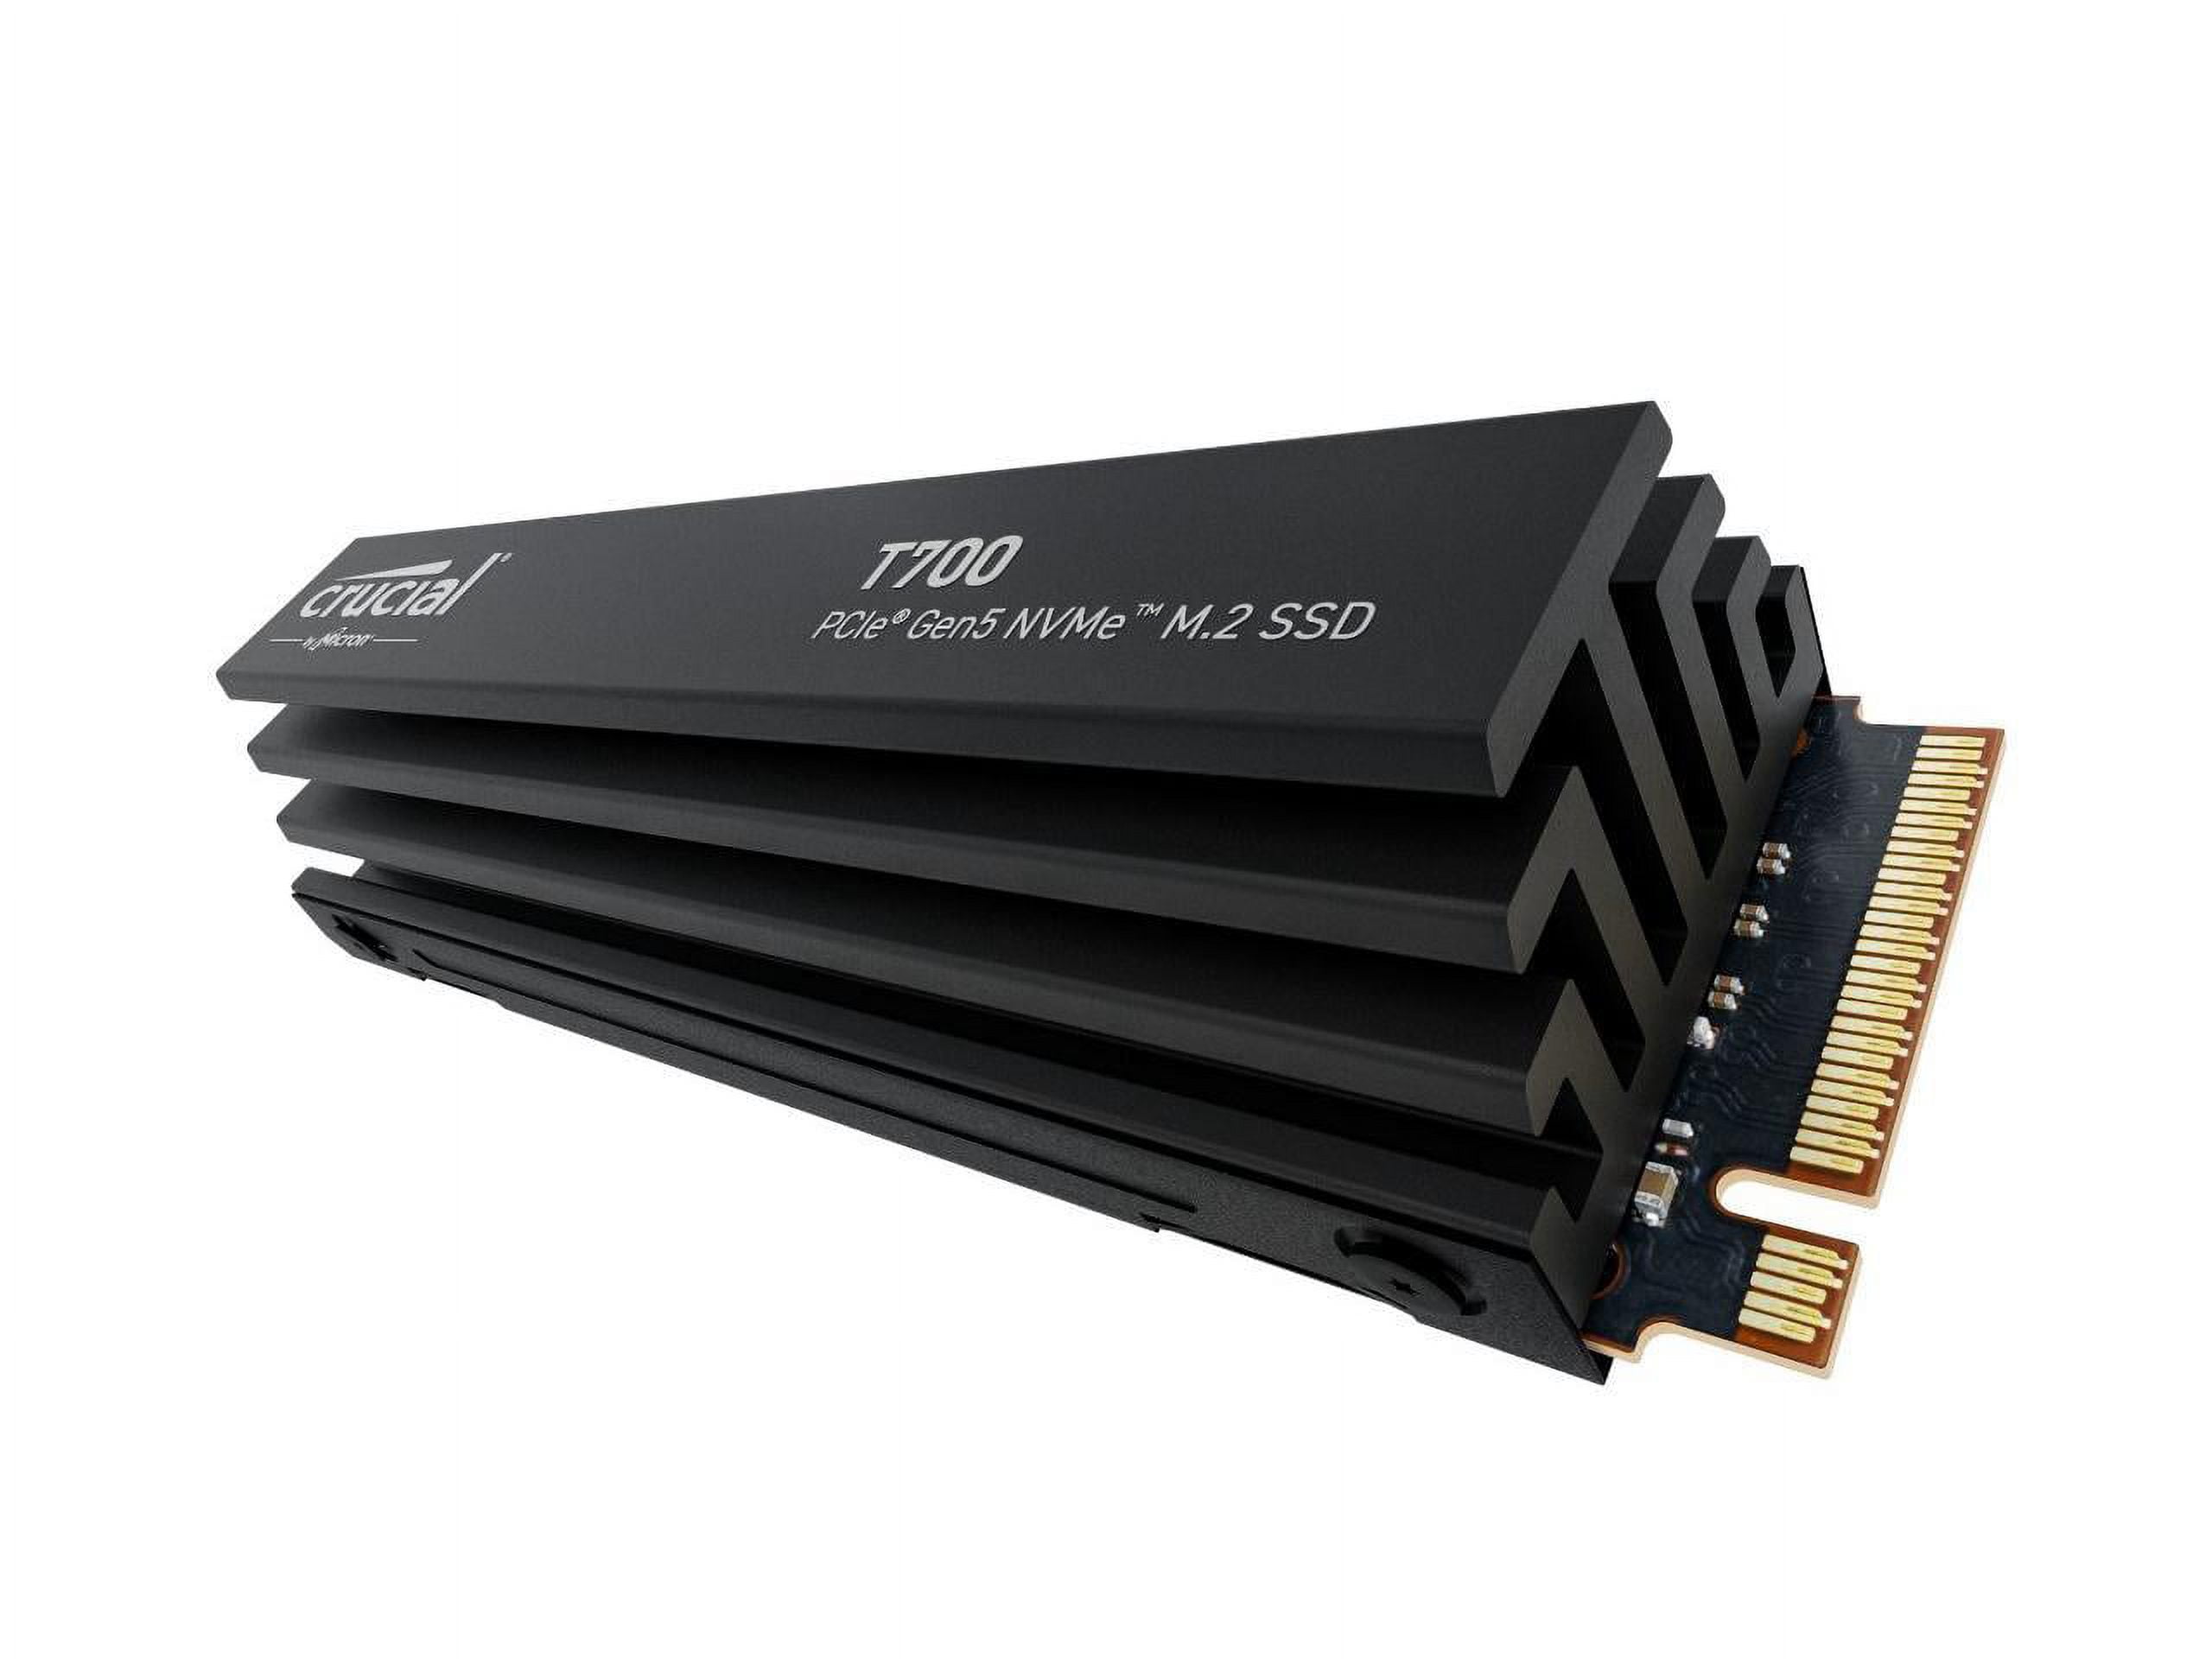 Crucial T700 GEN5 NVME M.2 SSD w/ Heatsink 2280 1TB PCI-Express